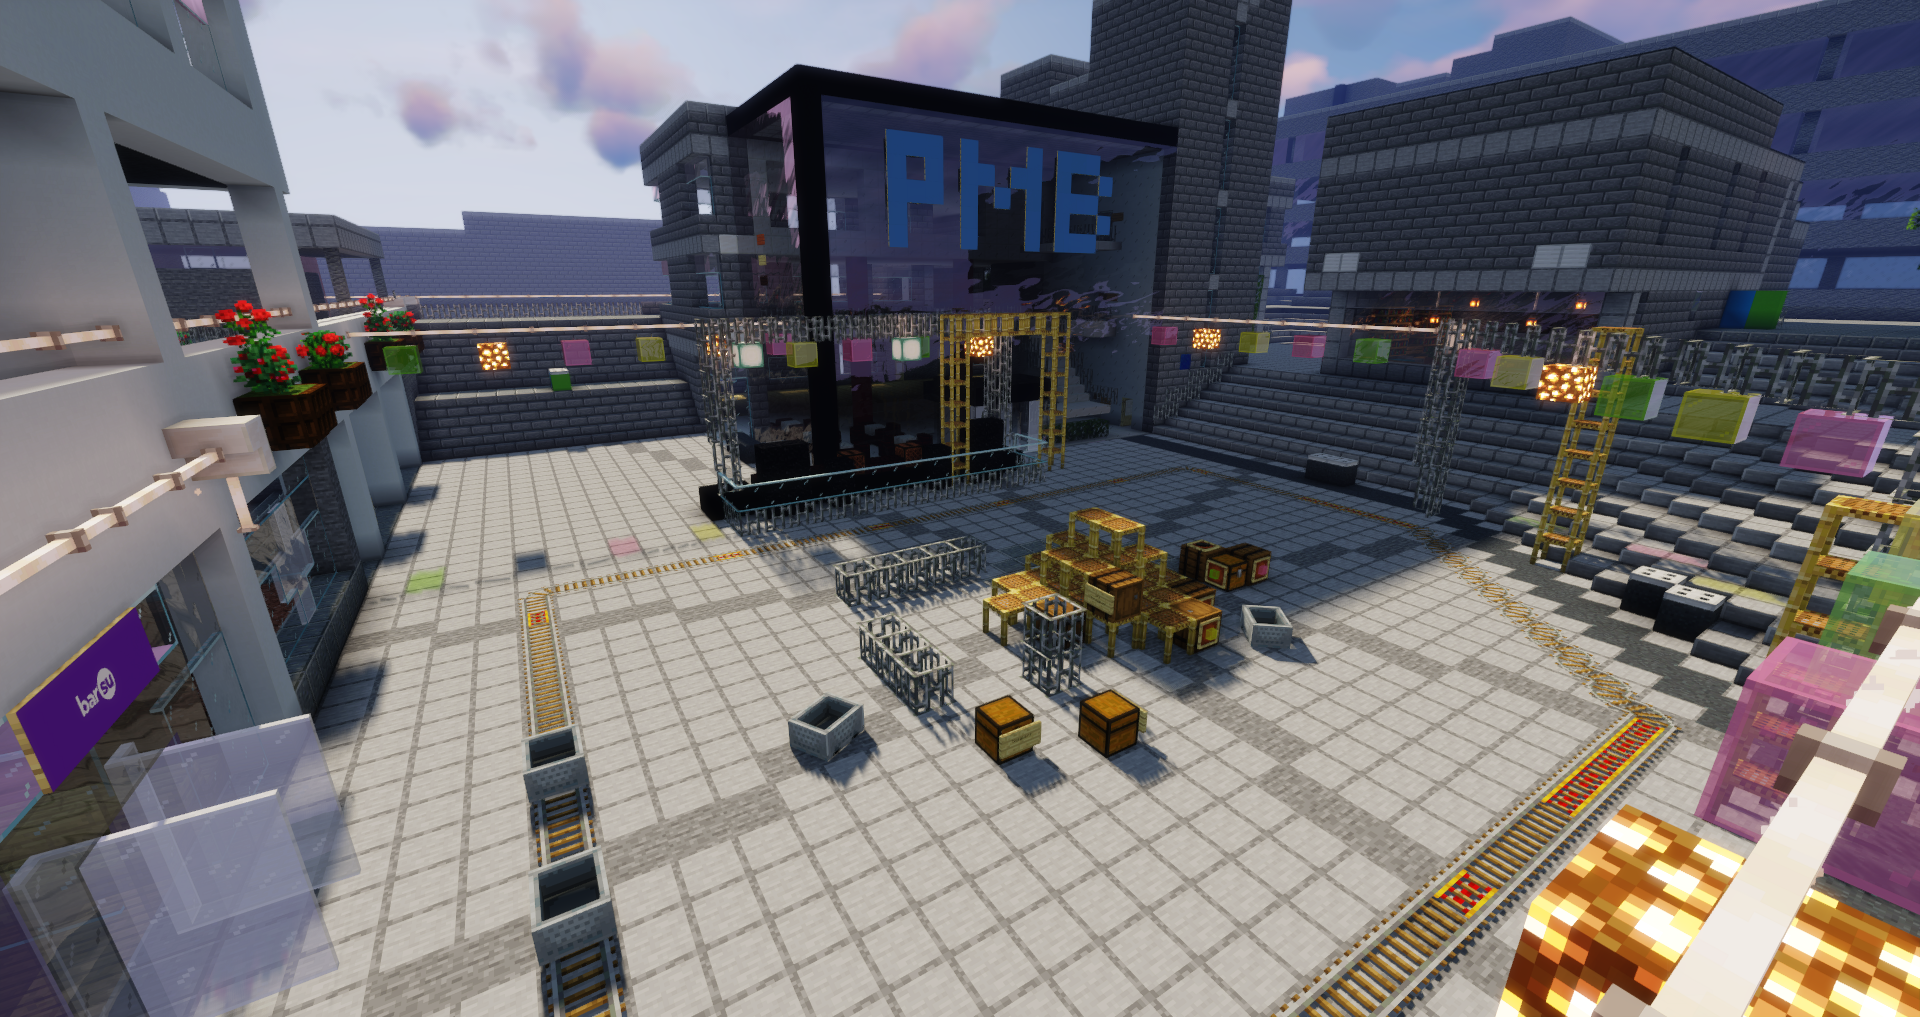 UEA main square in minecraft